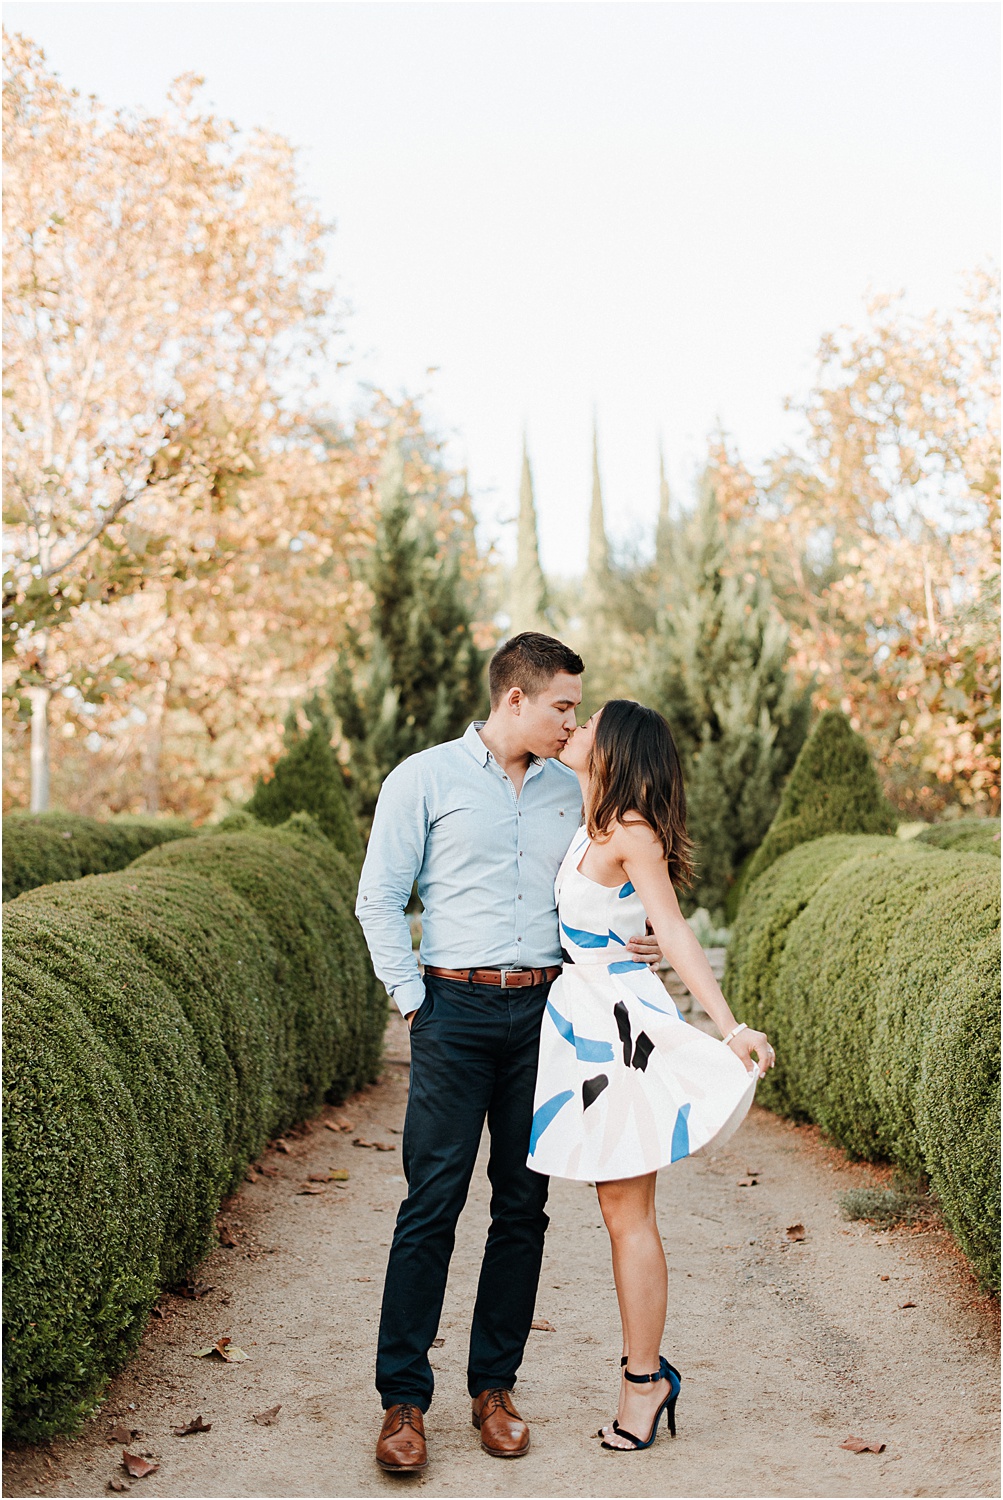 Bianca+Grant - Arlington Gardens - Pasadena - Engagement_0023.jpg